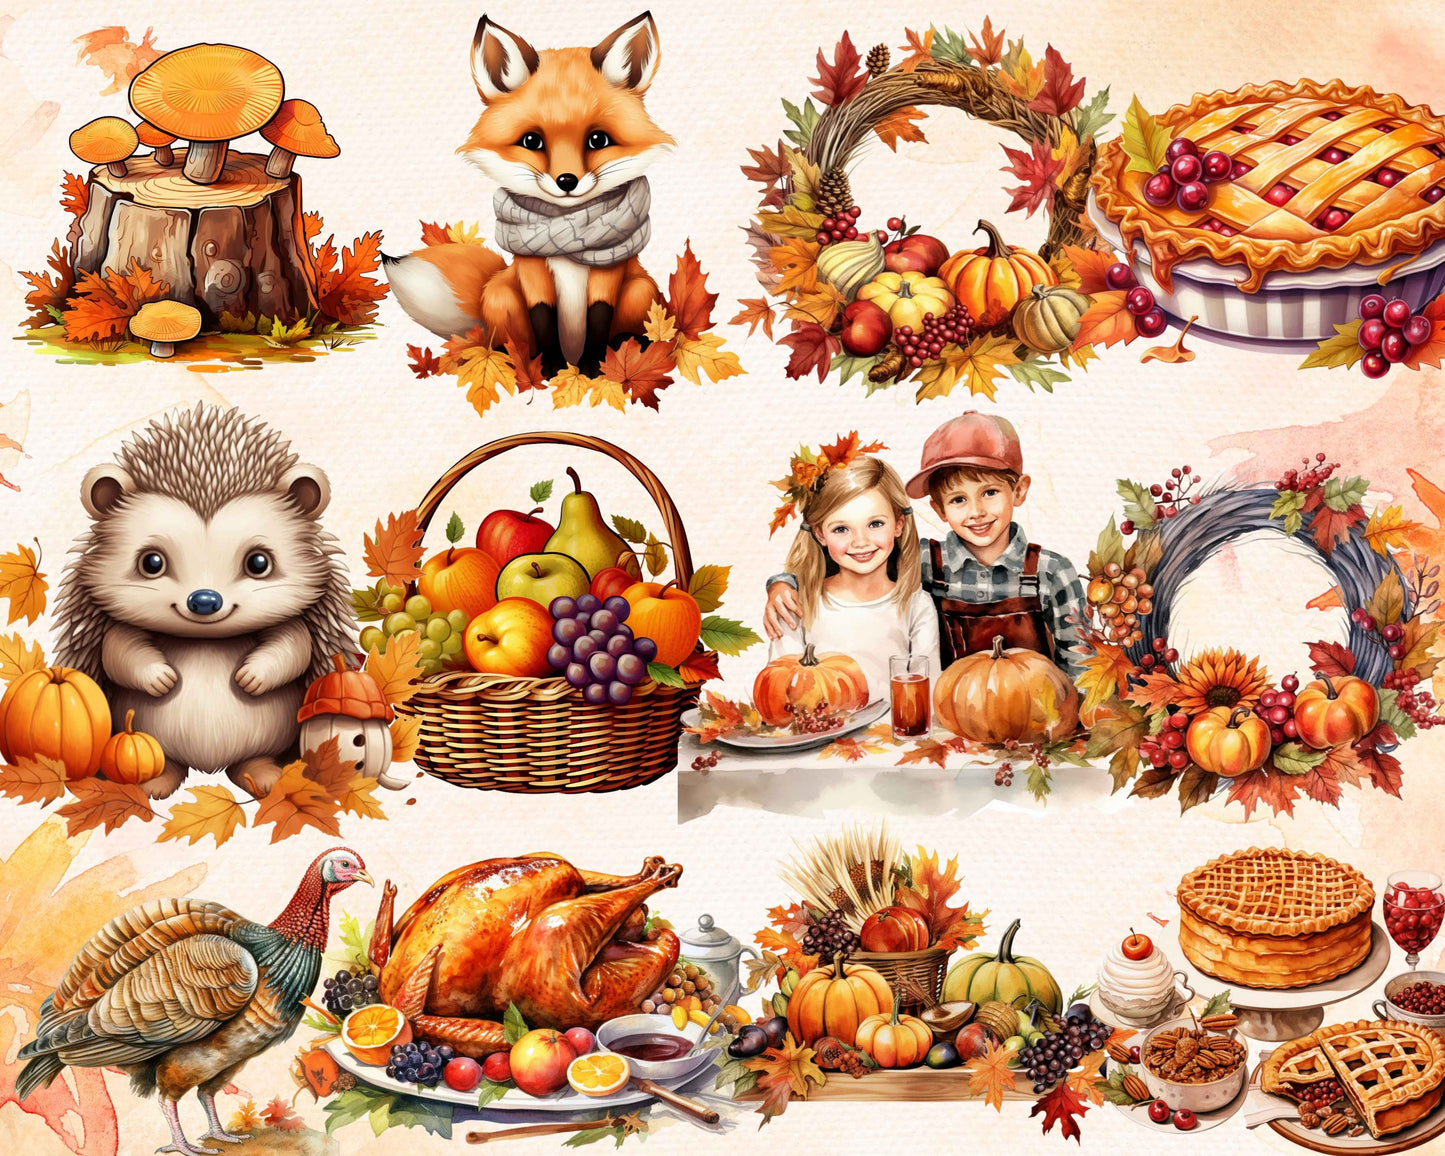 300+ PNG Watercolor Autumn Clipart Mega Bundle, Fall Season Illustrations for Sublimation Printing